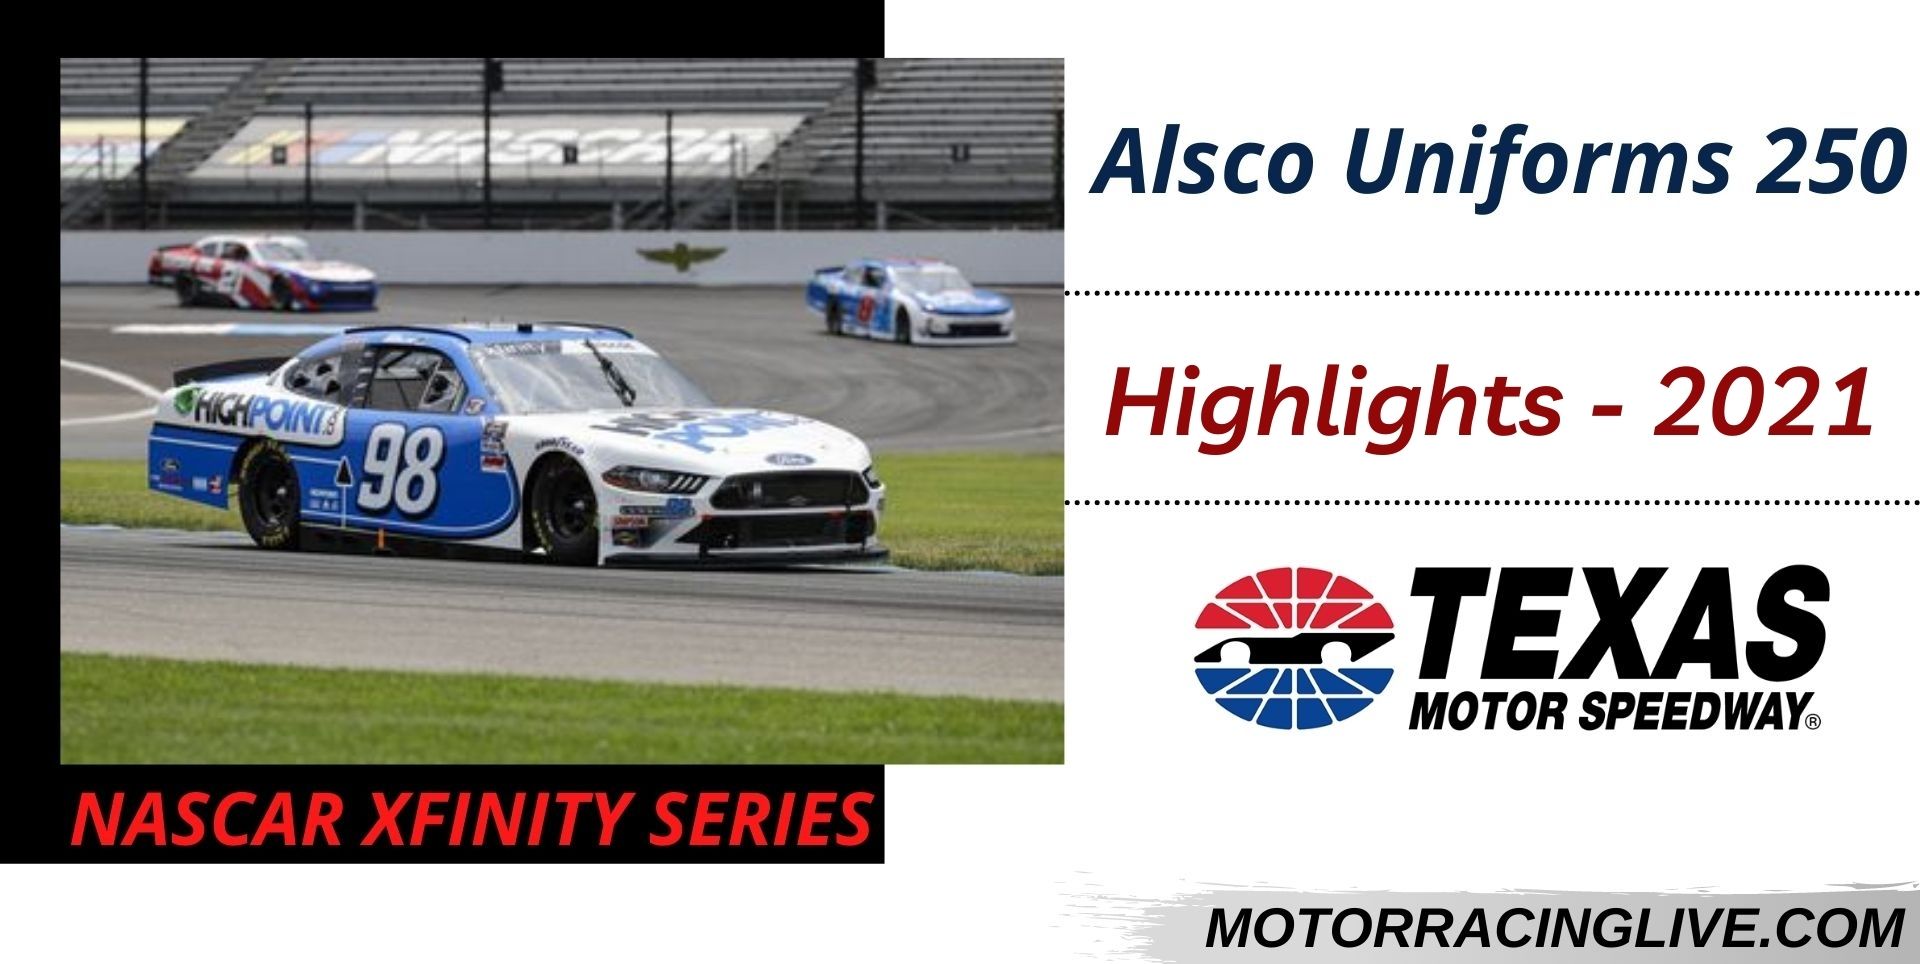 Alsco Uniforms 250 Highlights 2021 NASCAR Xfinity